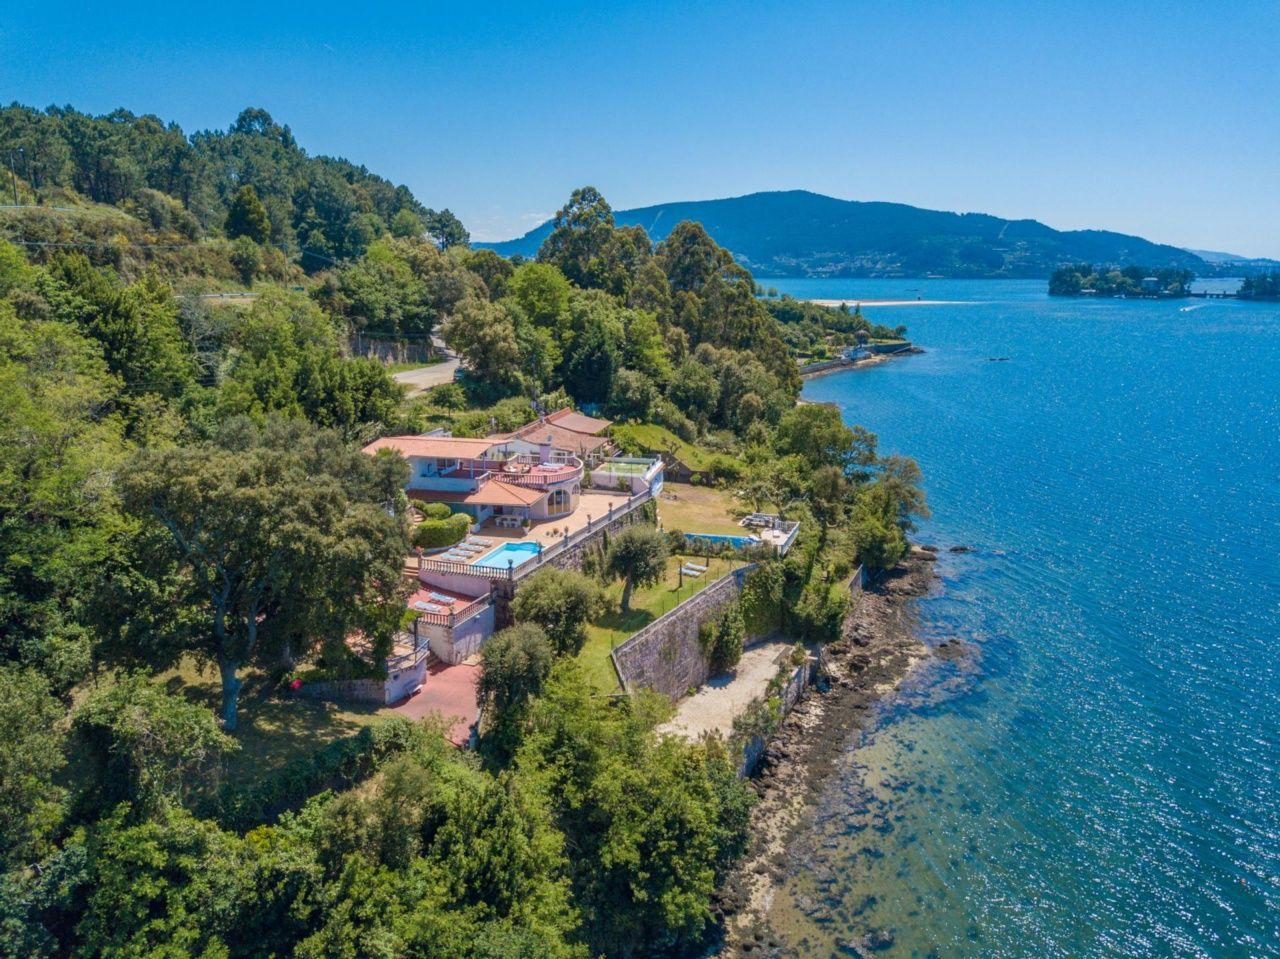 Tolle Villa oberhalb der Bucht Ria de Vigo Ferienhaus in Europa